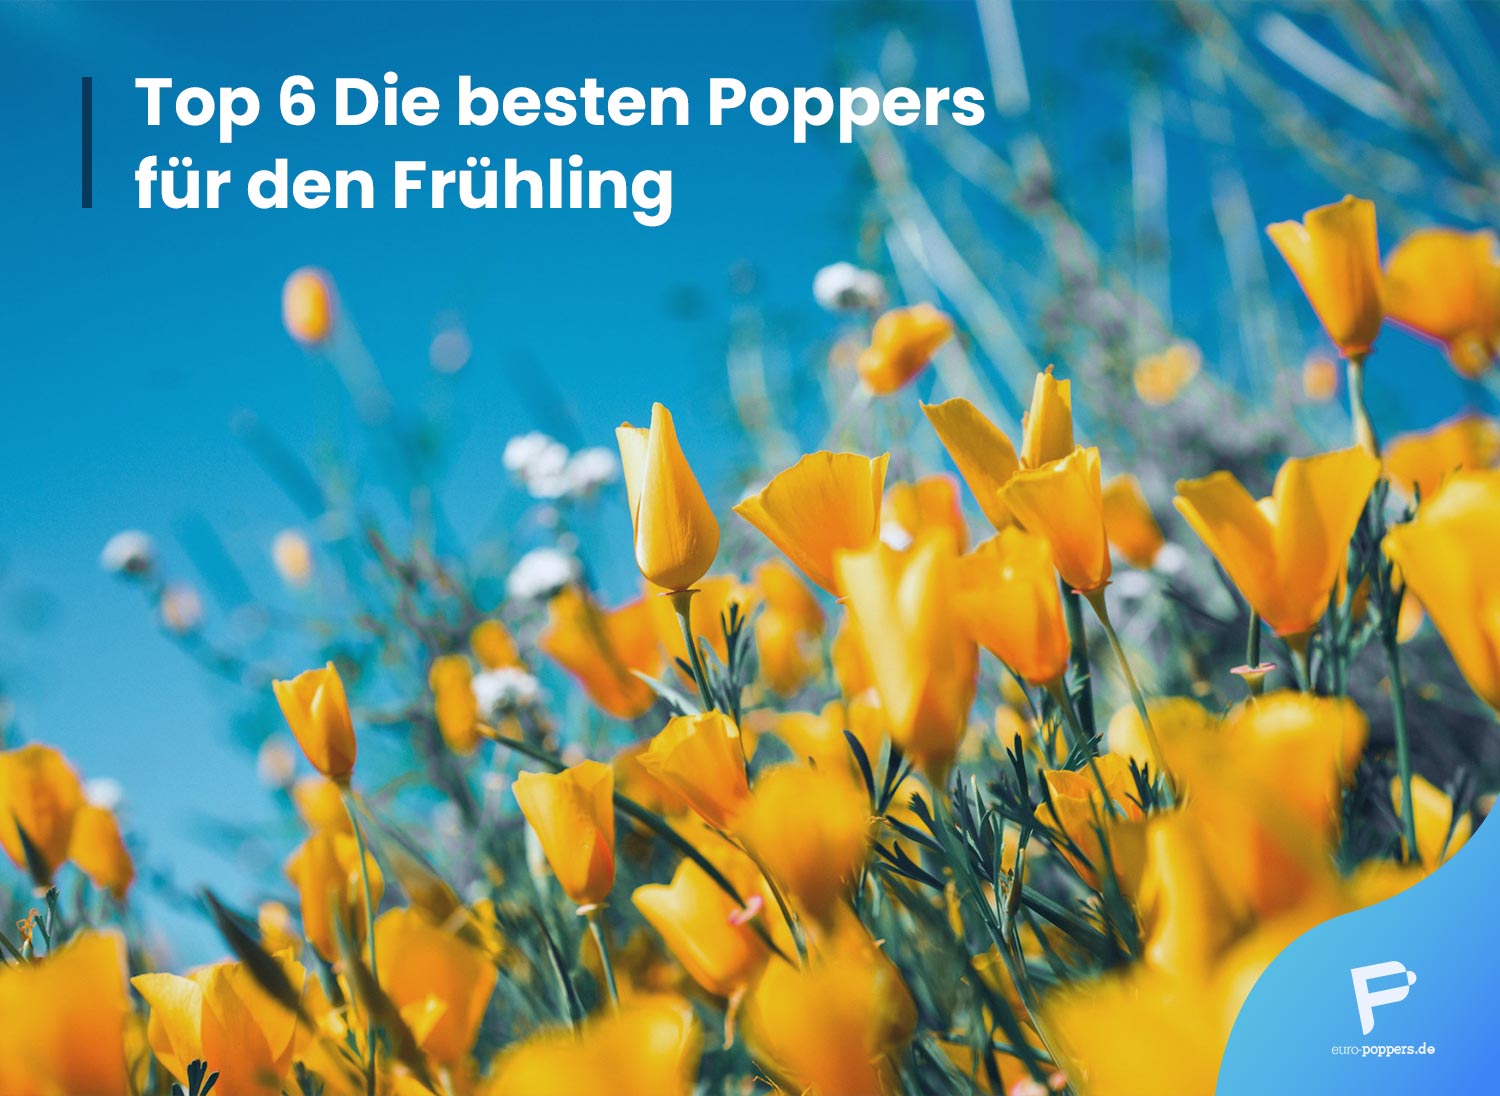 You are currently viewing Top 6 Die besten Poppers für den Frühling